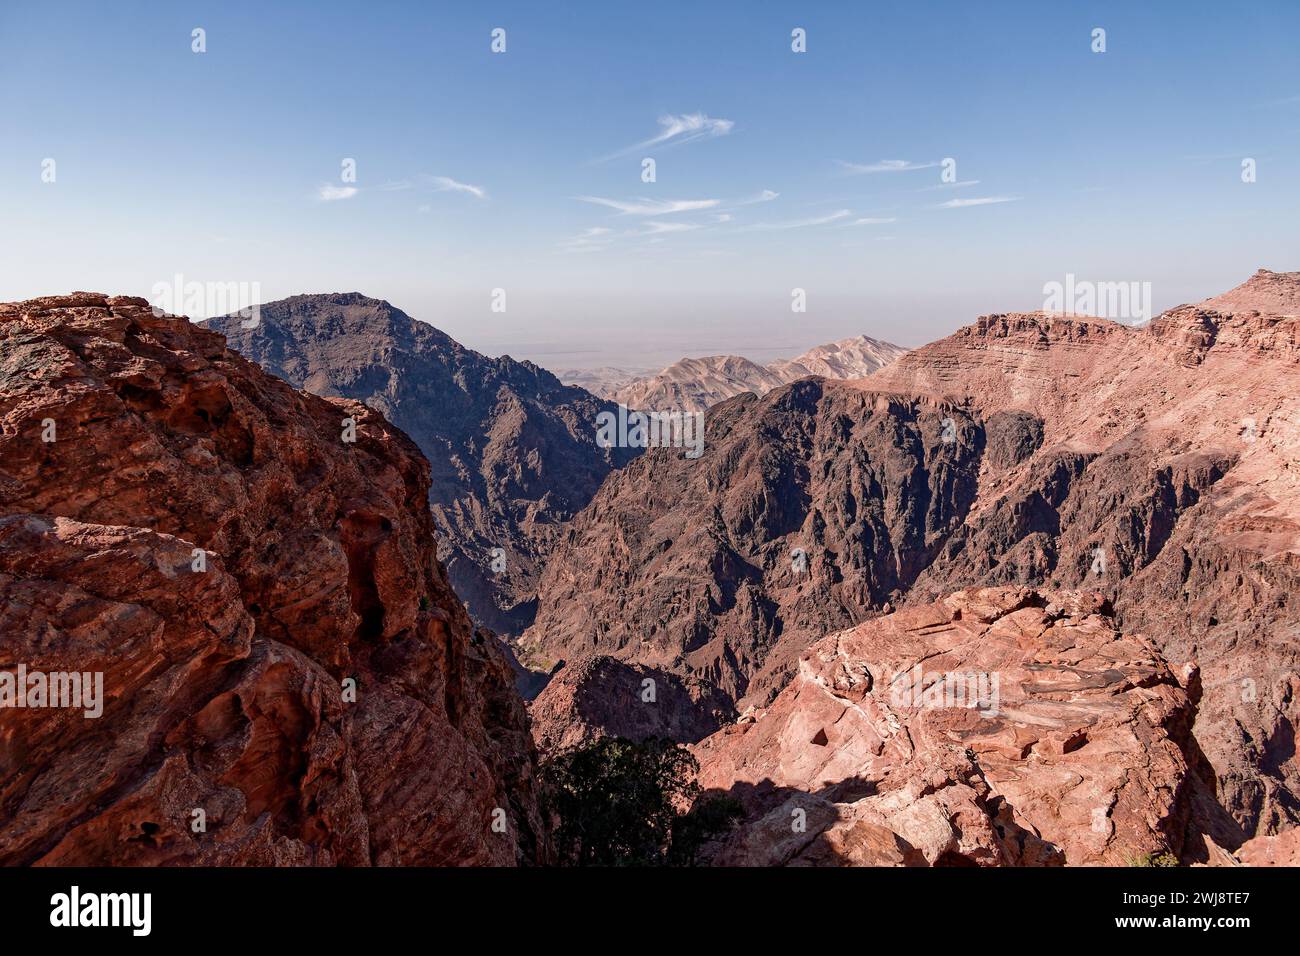 Der Wadi Araba aus dem Kloster Petra, Jordanien. Foto: MLBARIONA/Alamy Stock Photo Stockfoto